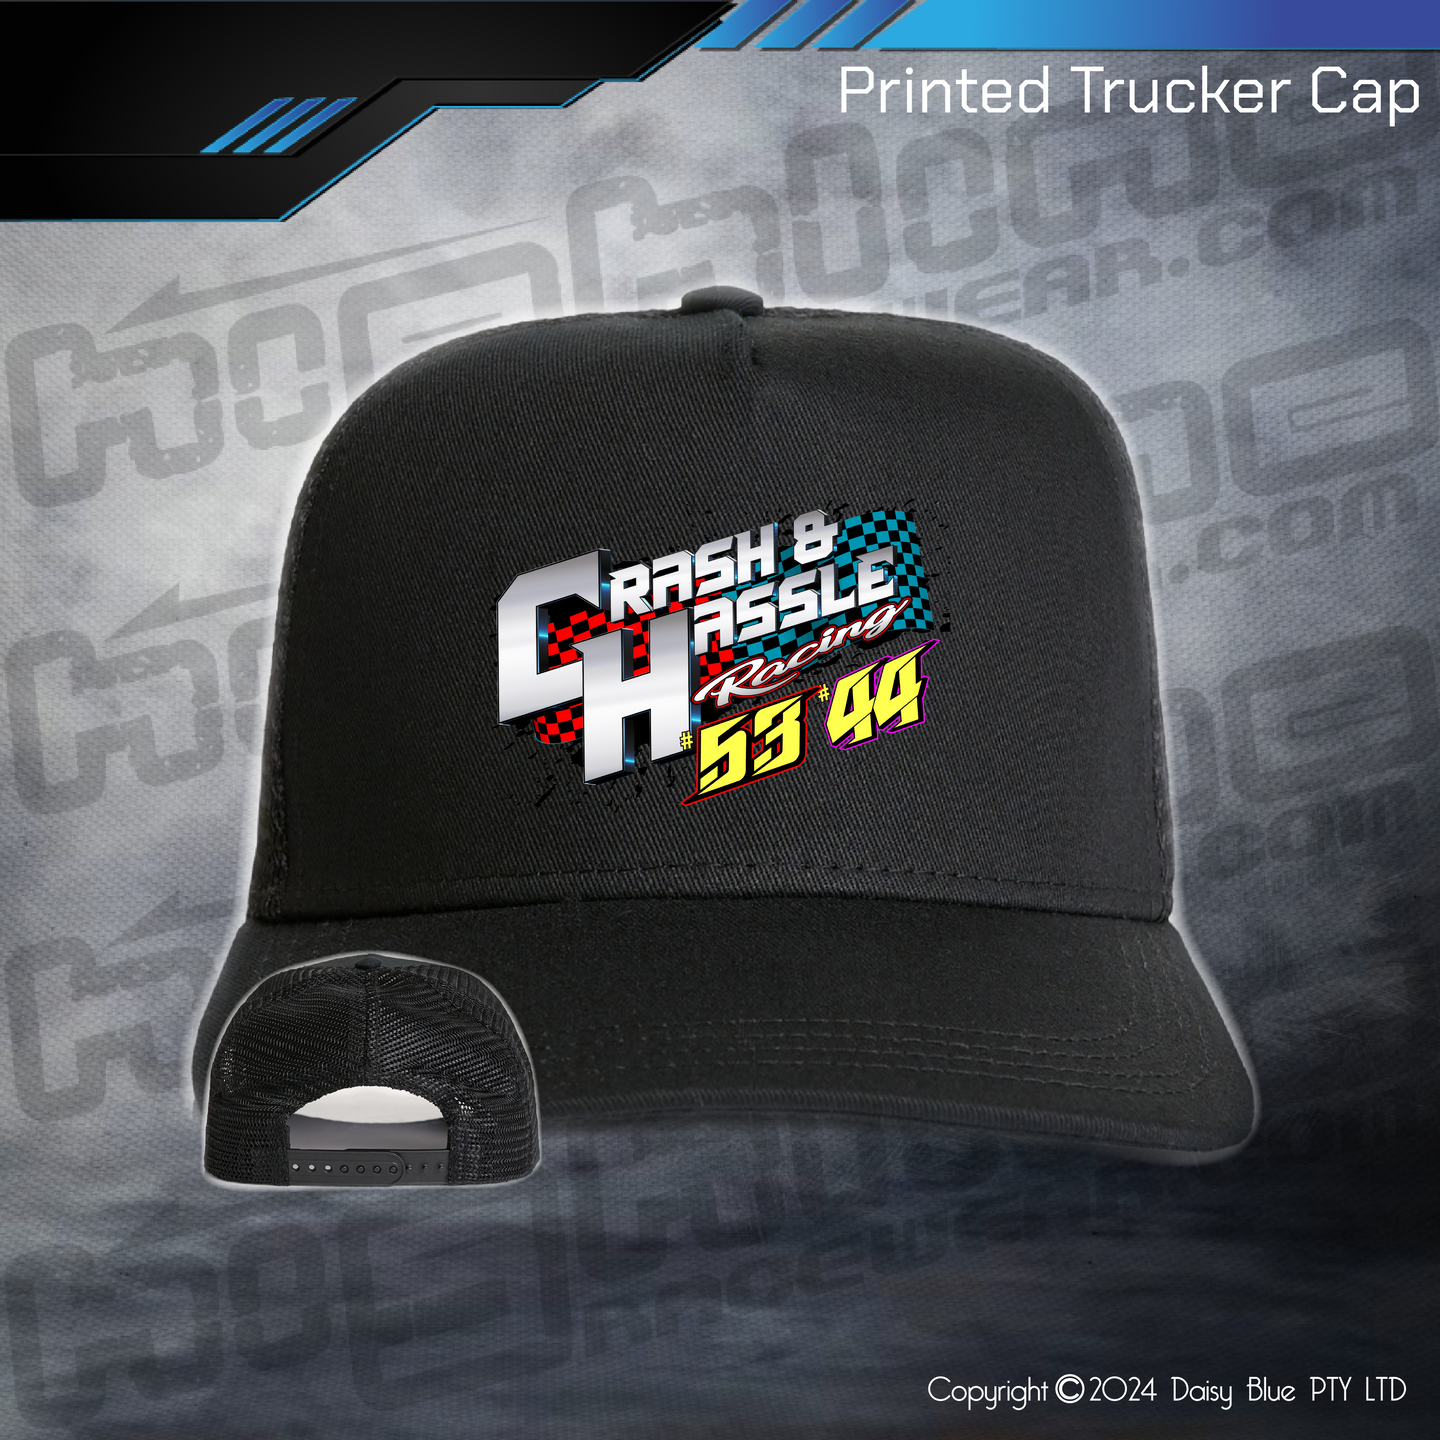 Printed Trucker Cap - Crash N Hassle Racing